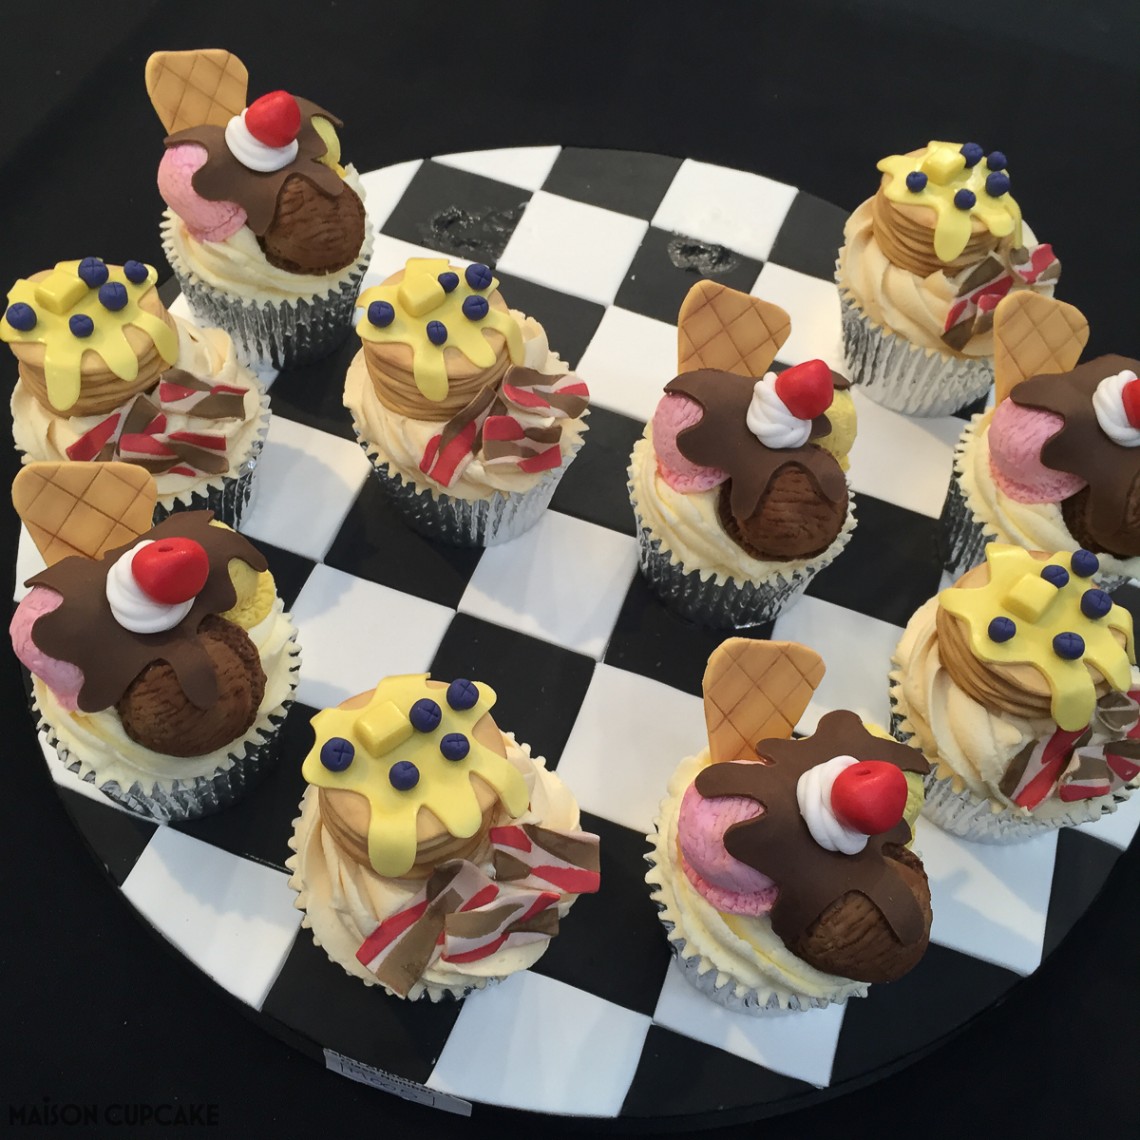 Pancake stack and waffle cupcakes by Katrina Denbigh